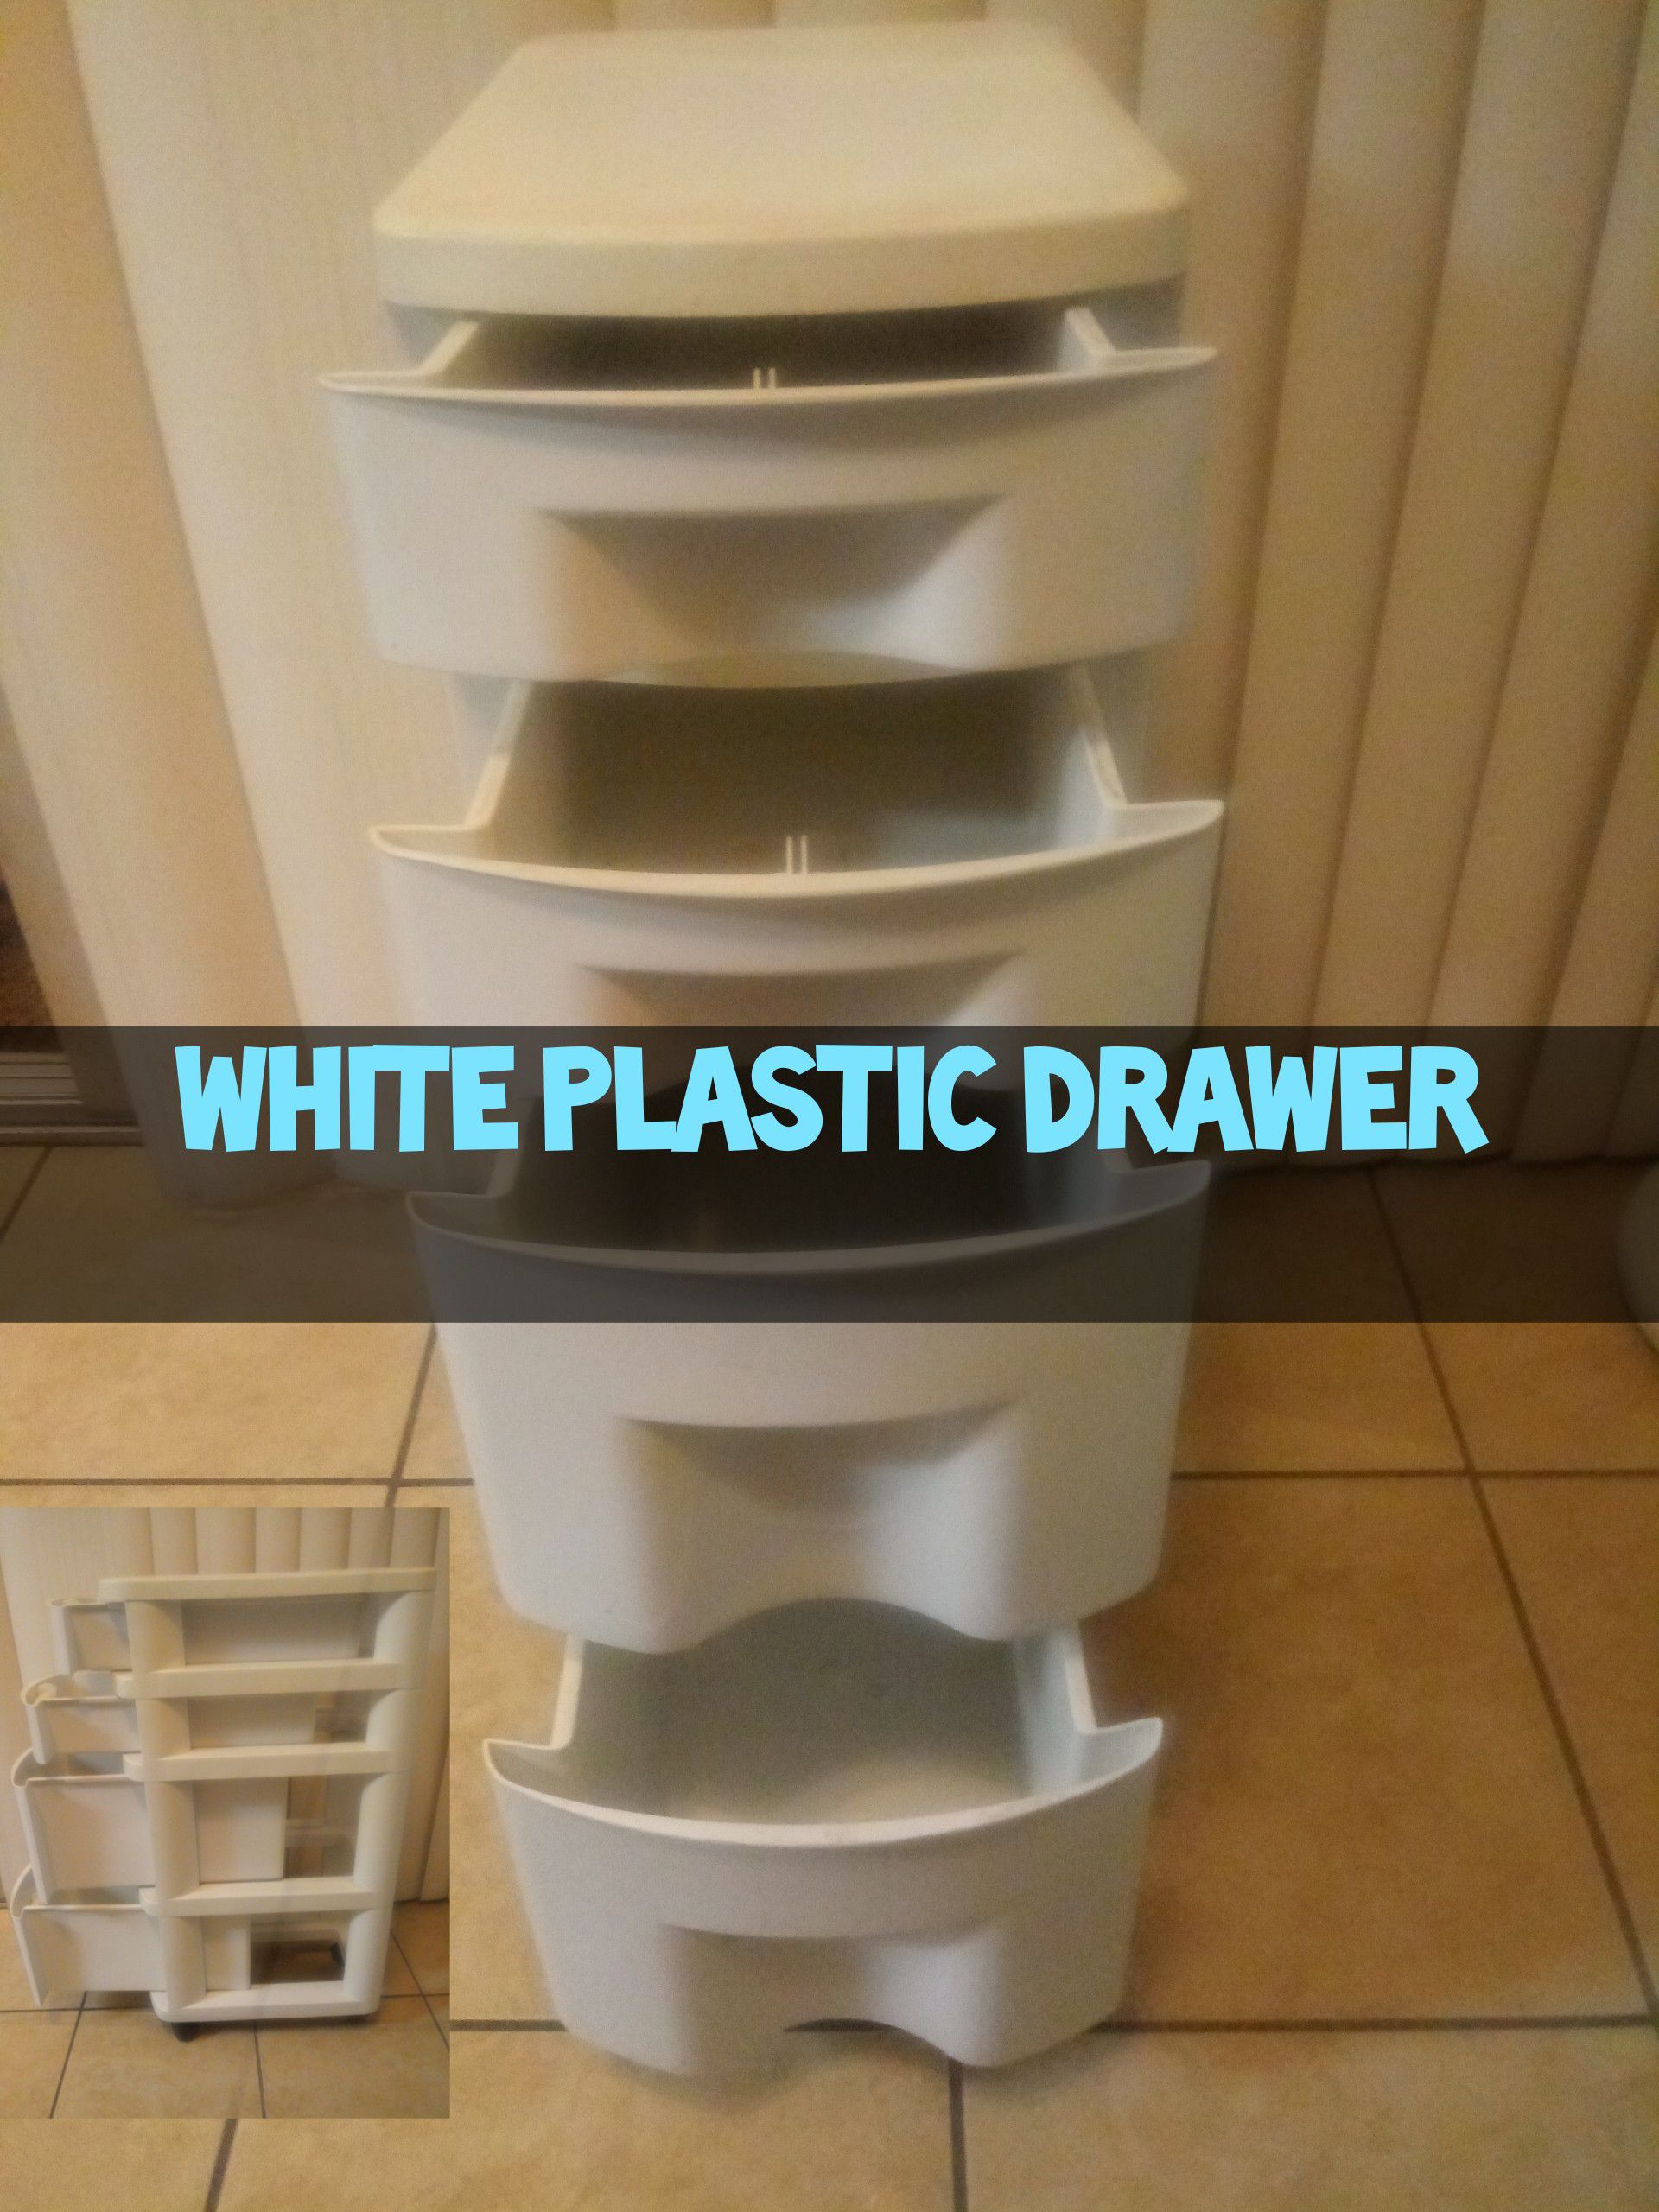 Plastic drawer